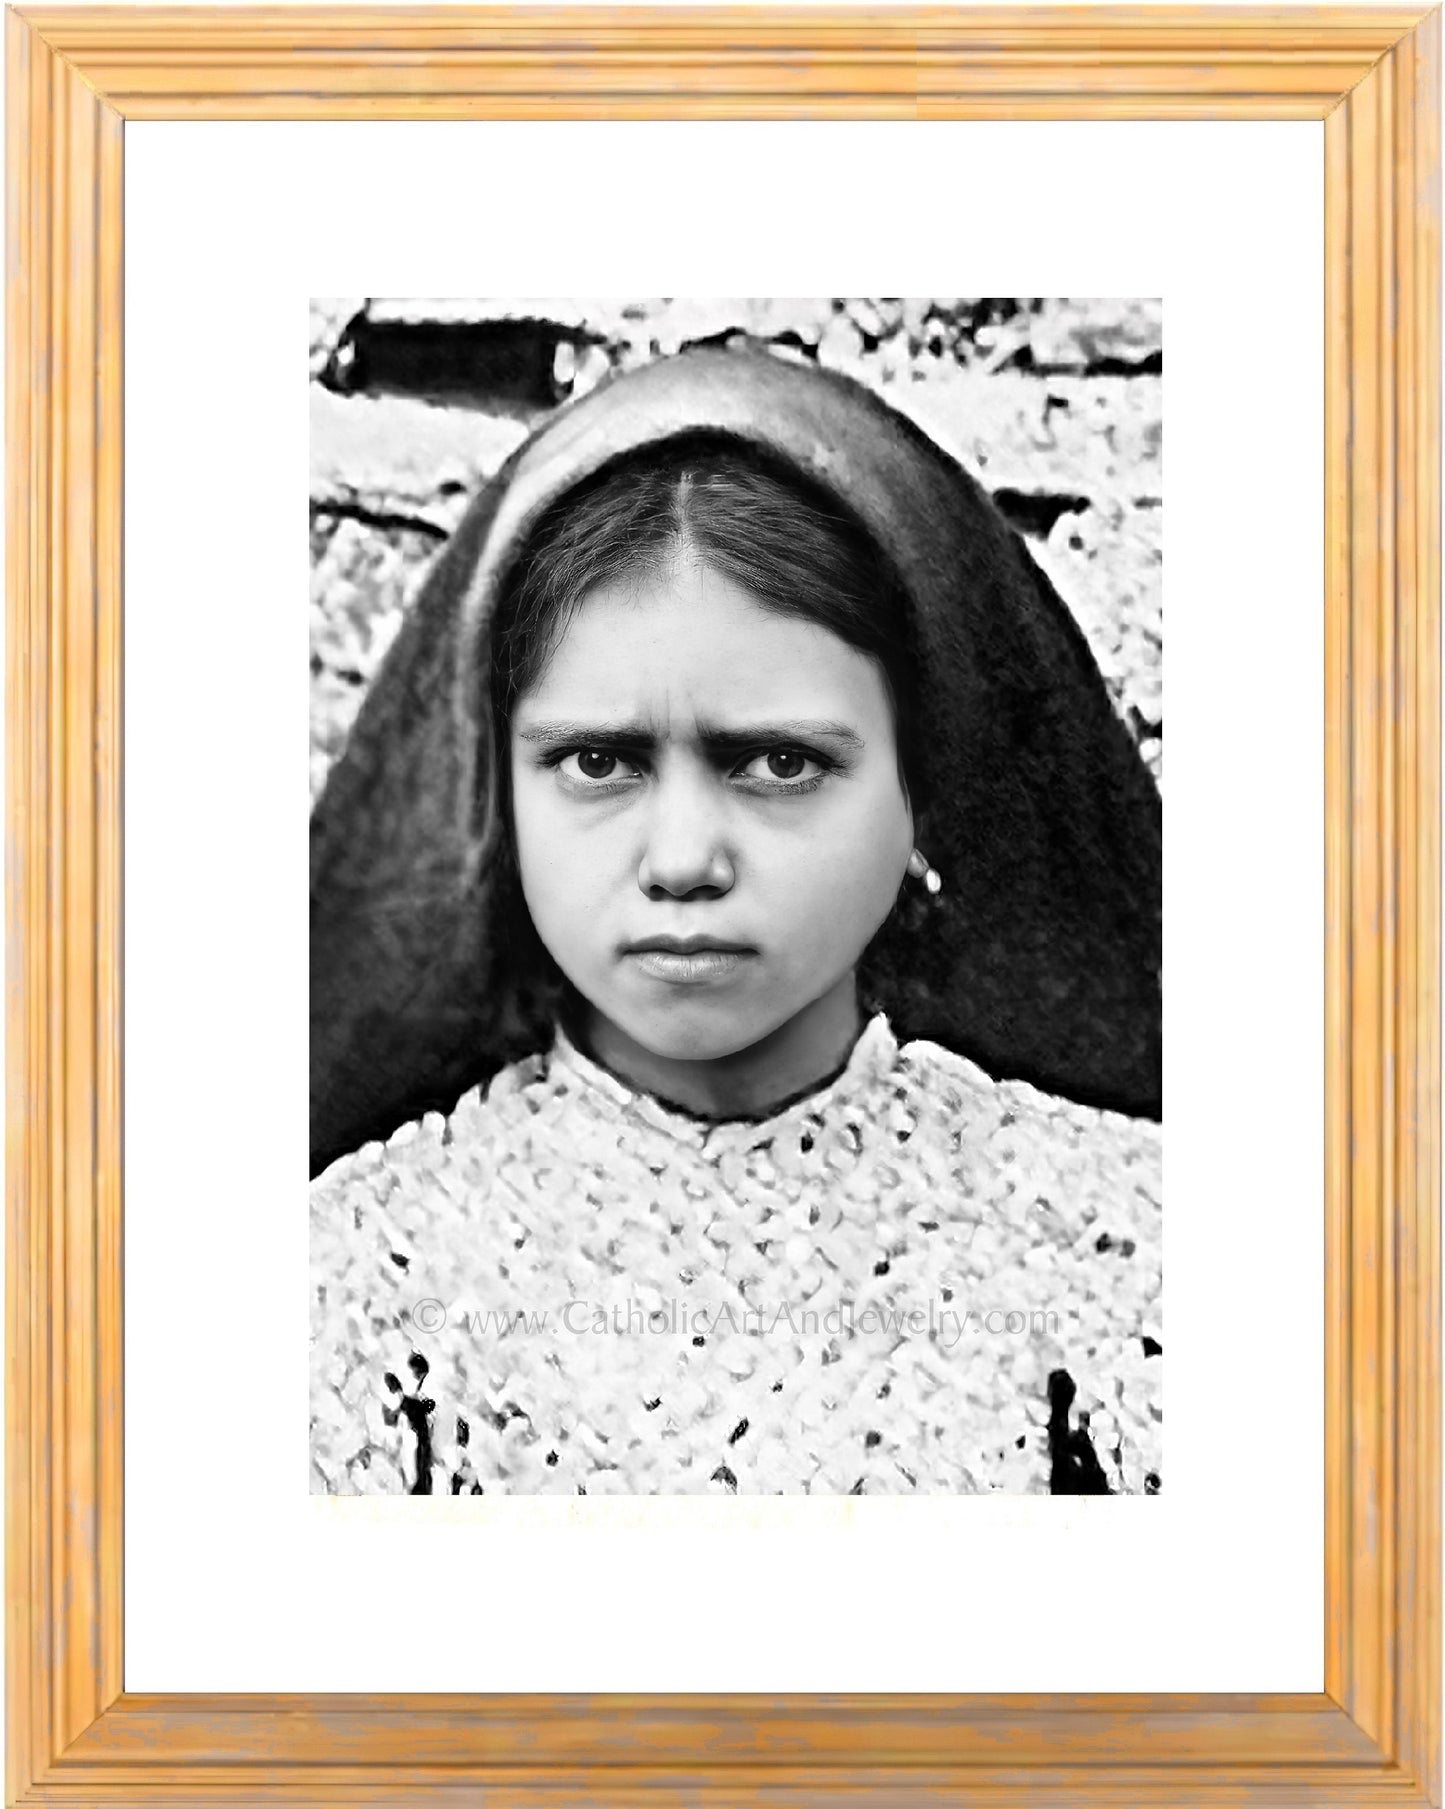 Exclusive! St. Jacinta of Fatima - AI Restored Photo! - 3 sizes - Vintage Catholic Art - Archival Quality